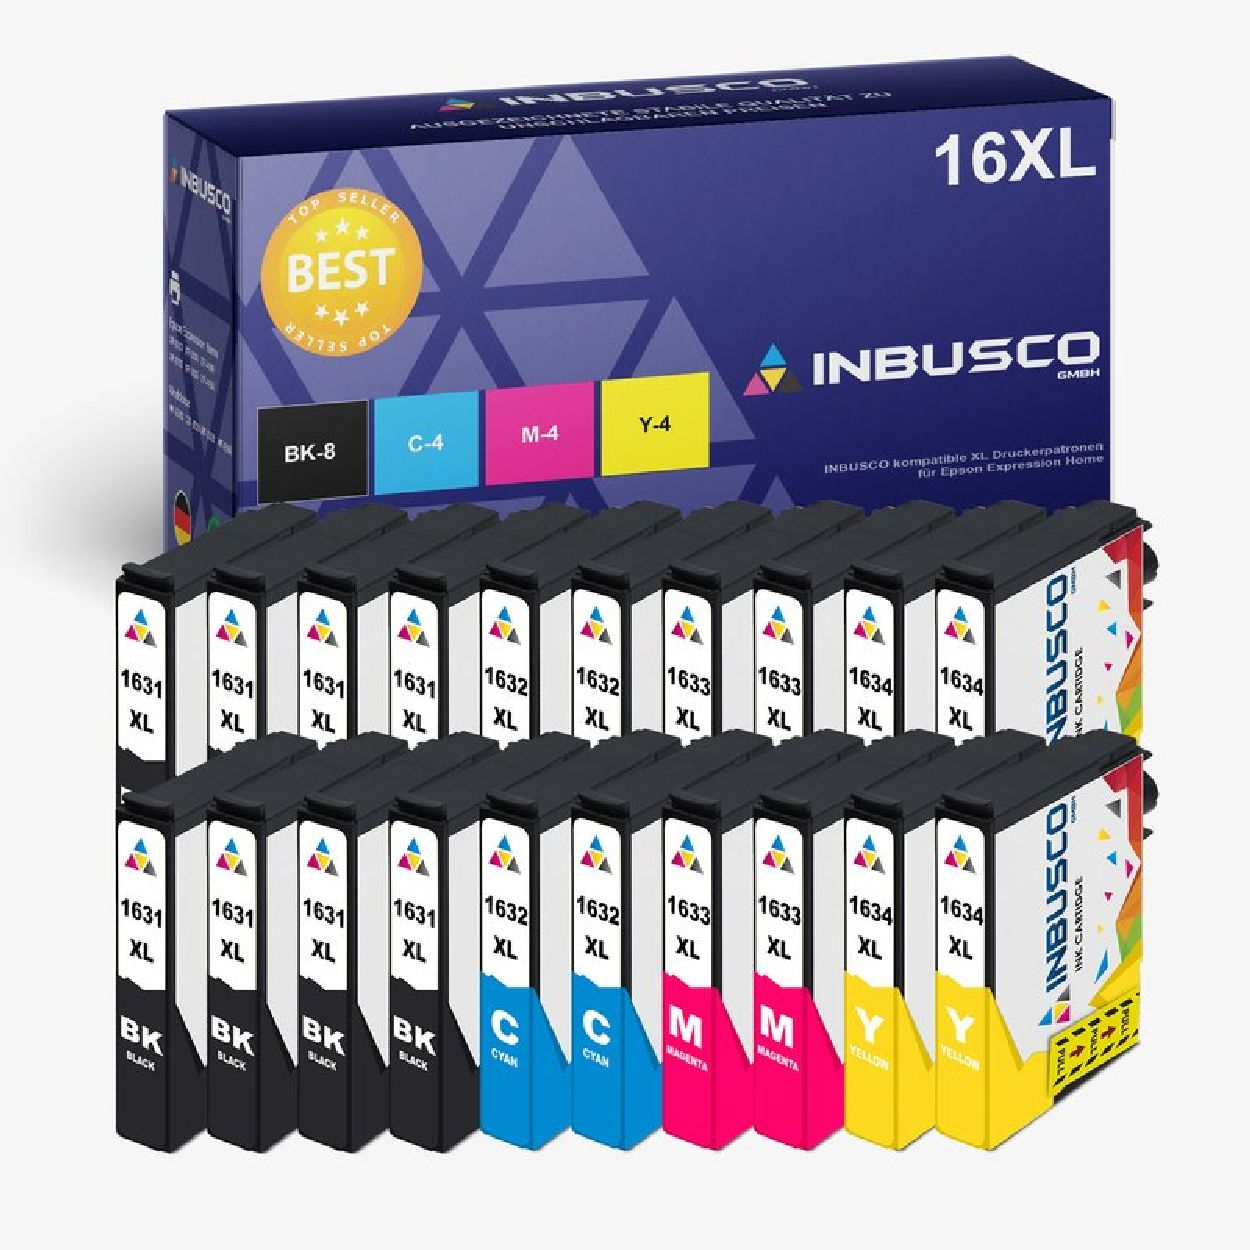 INBUSCO / KUBIS SET 16xl Tintenpatrone (20x16XL) Mehrfarbig